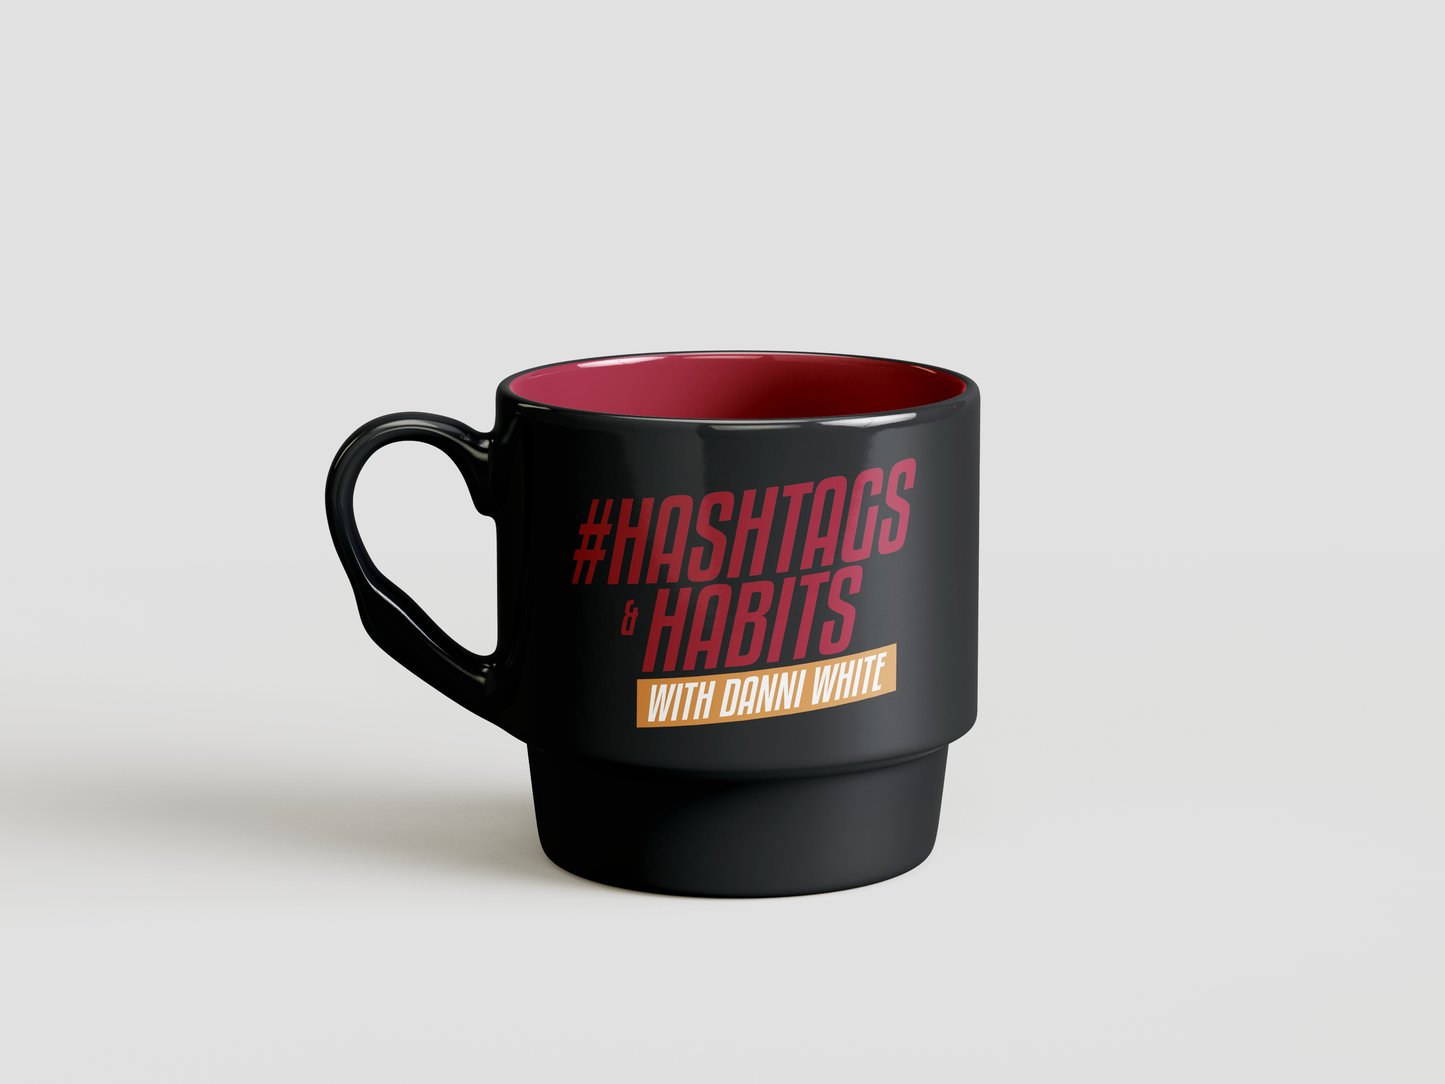 #Hashtags and Habits Podcast Coffee Mug